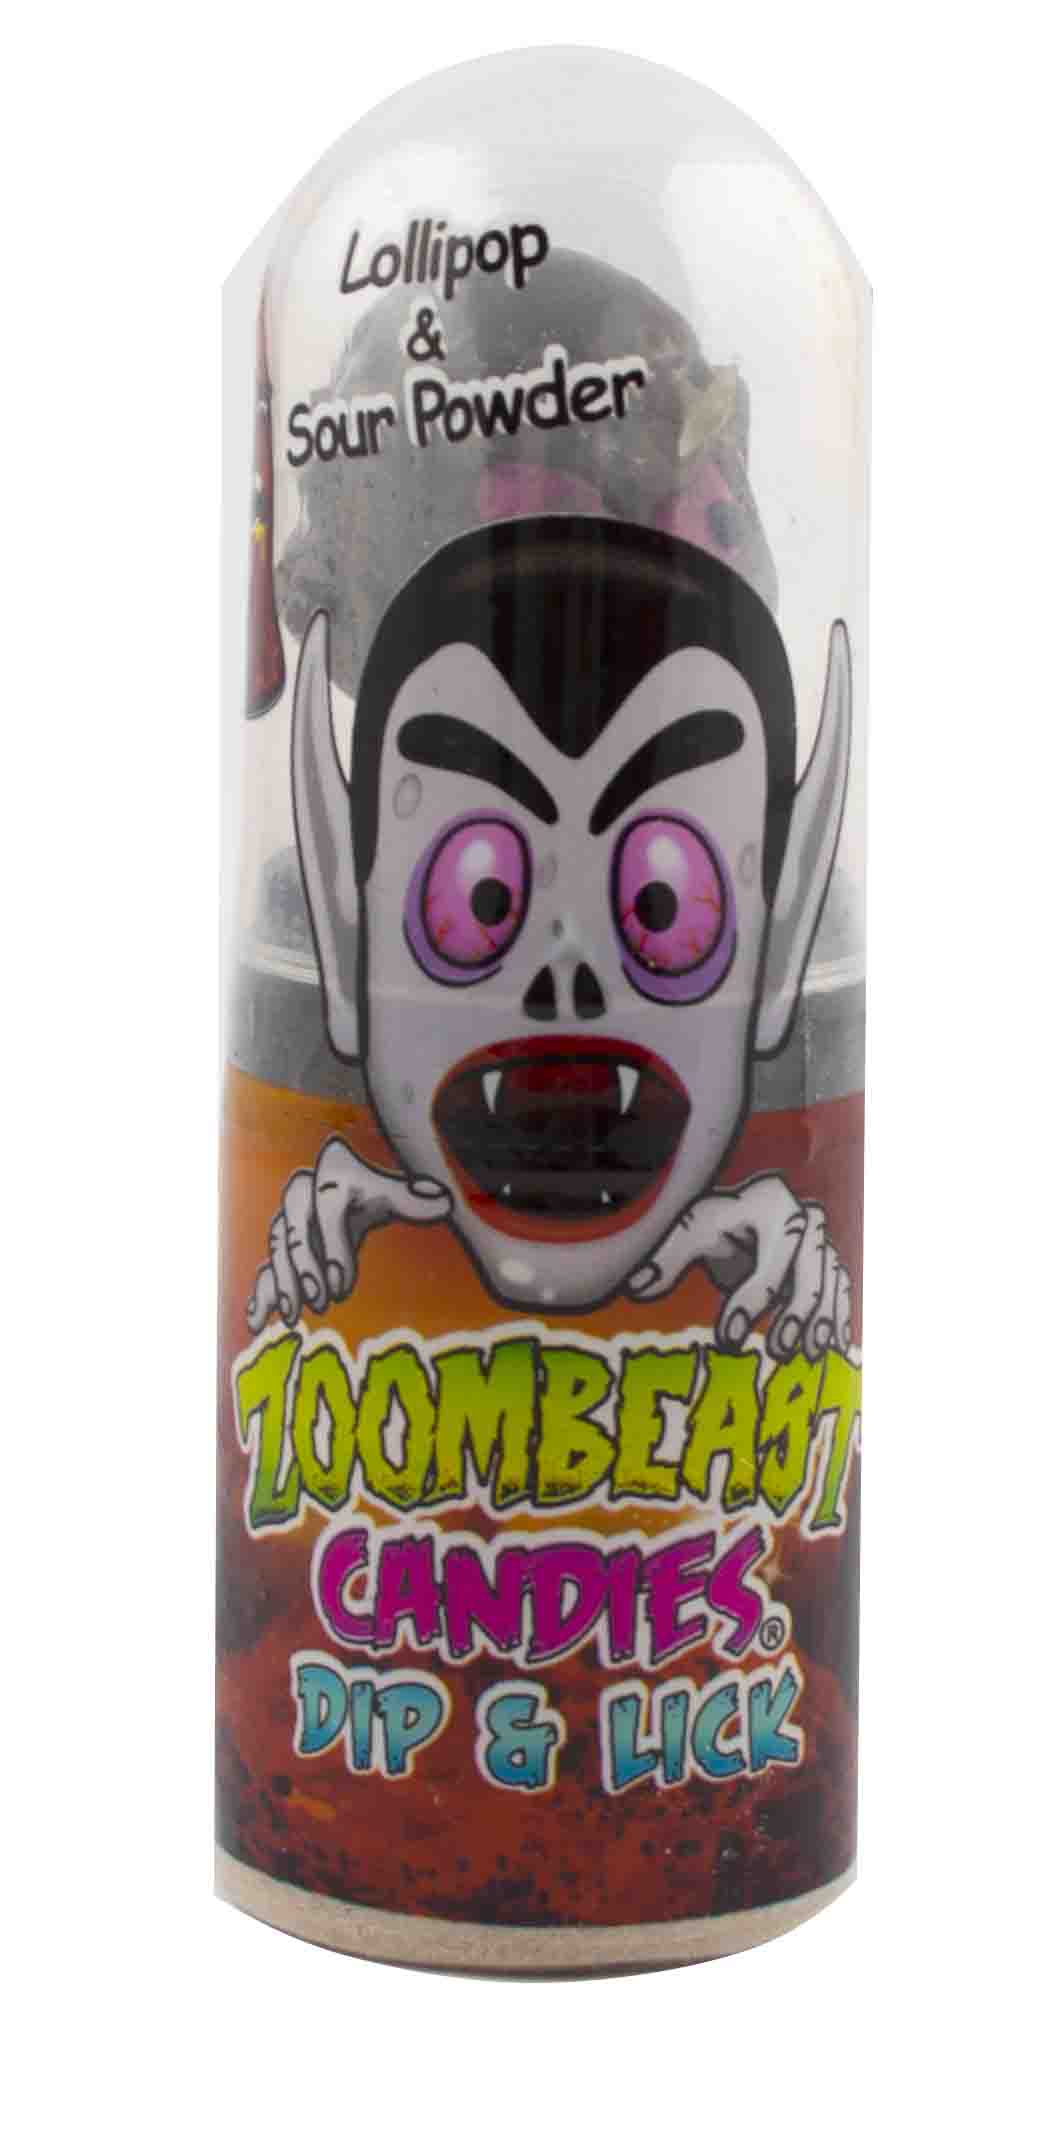 Zoombeast Candies Dip & Lick 40g x 12ks